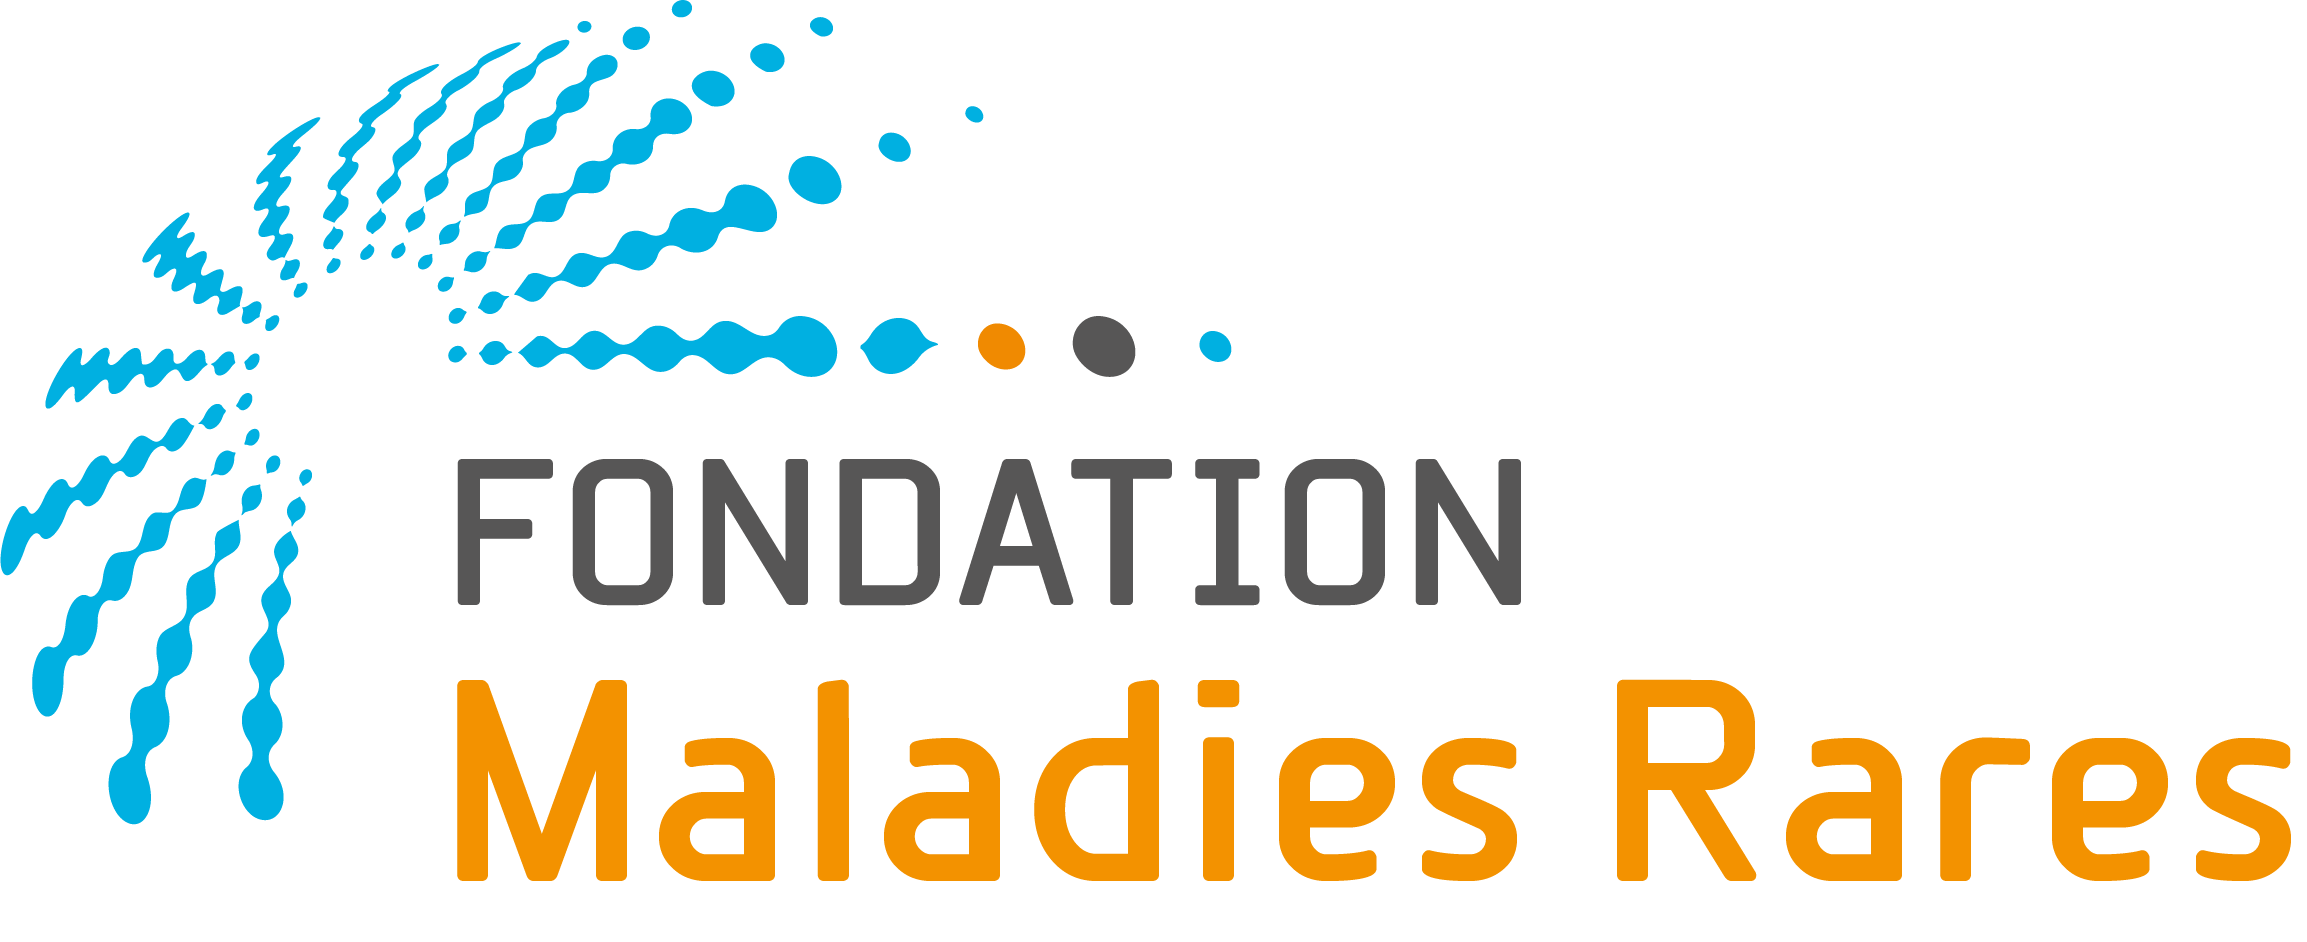 Fondation Maladies Rares